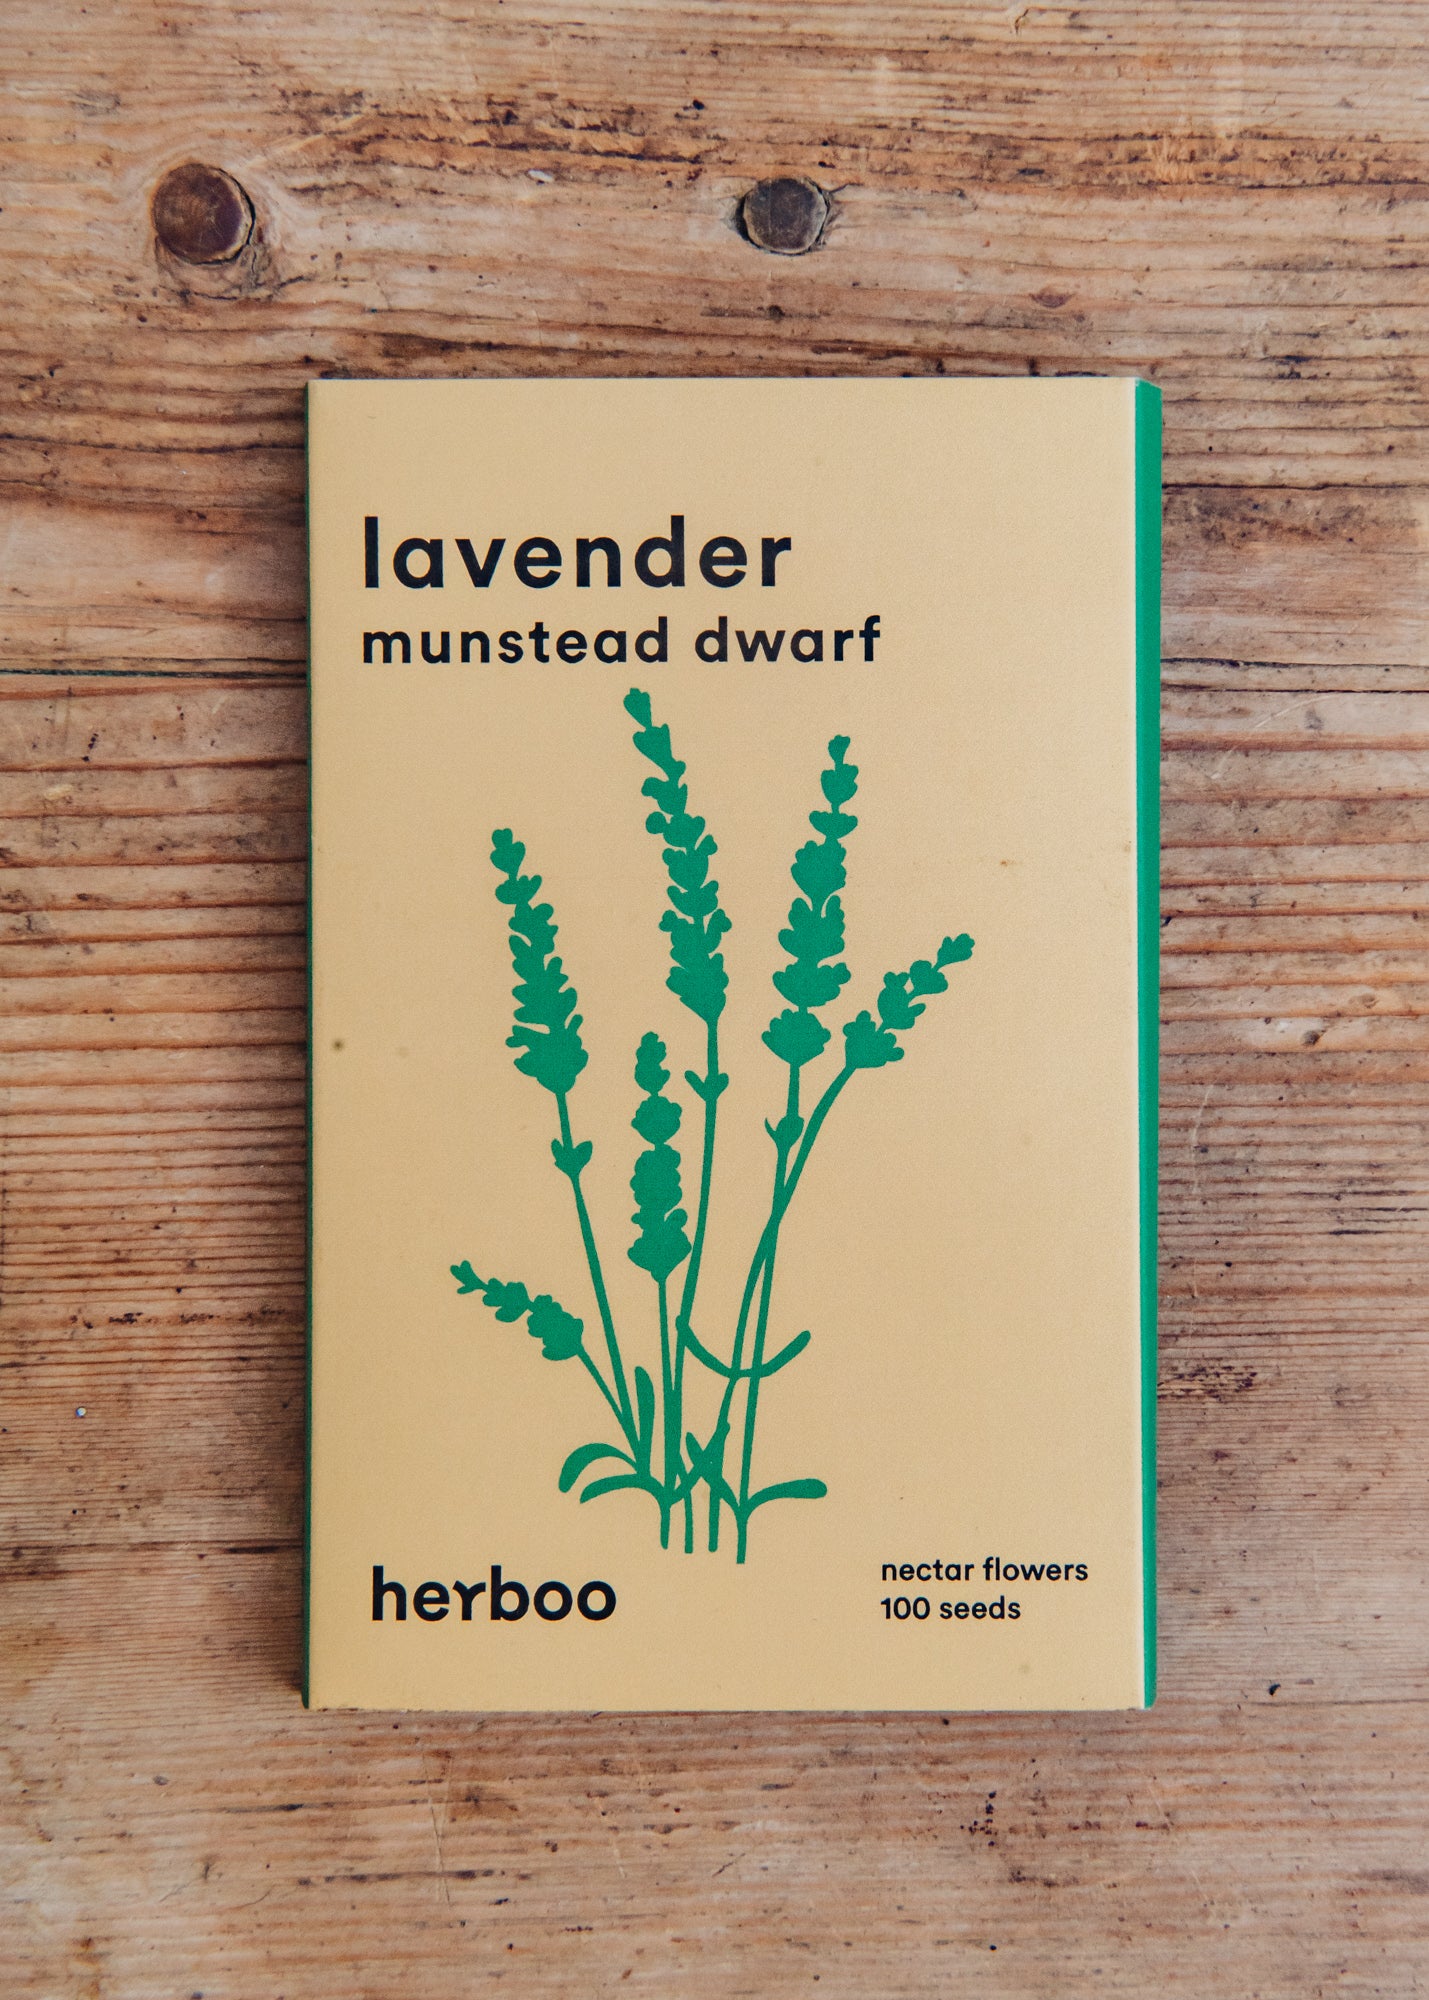 Dwarf Lavender Munstead Seeds